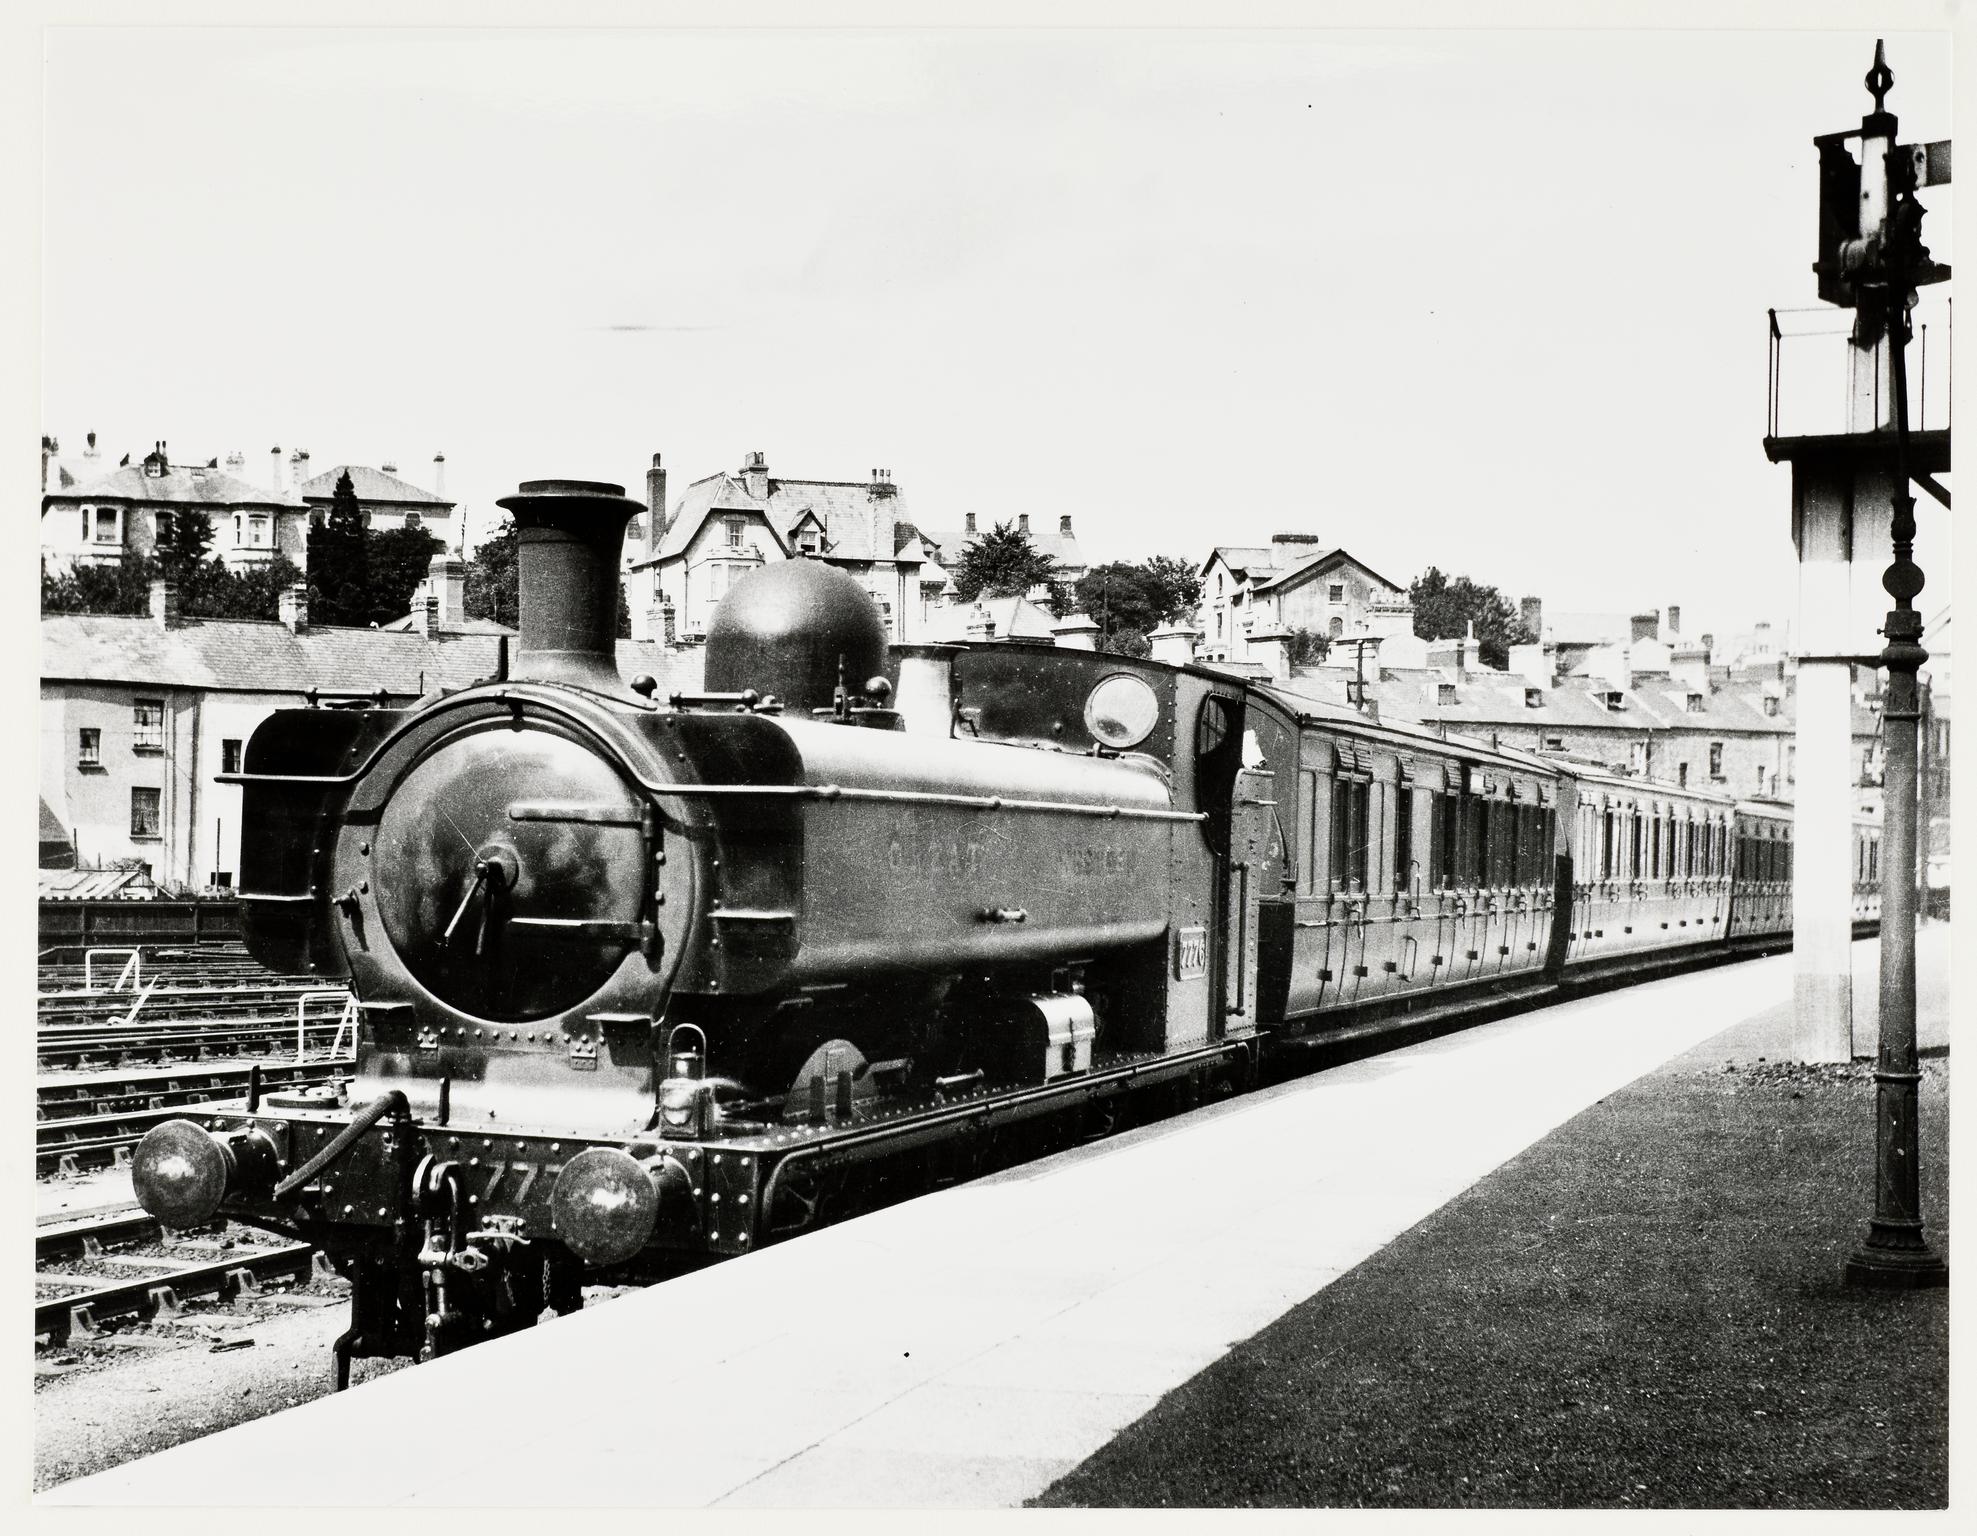 Newport station, photograph